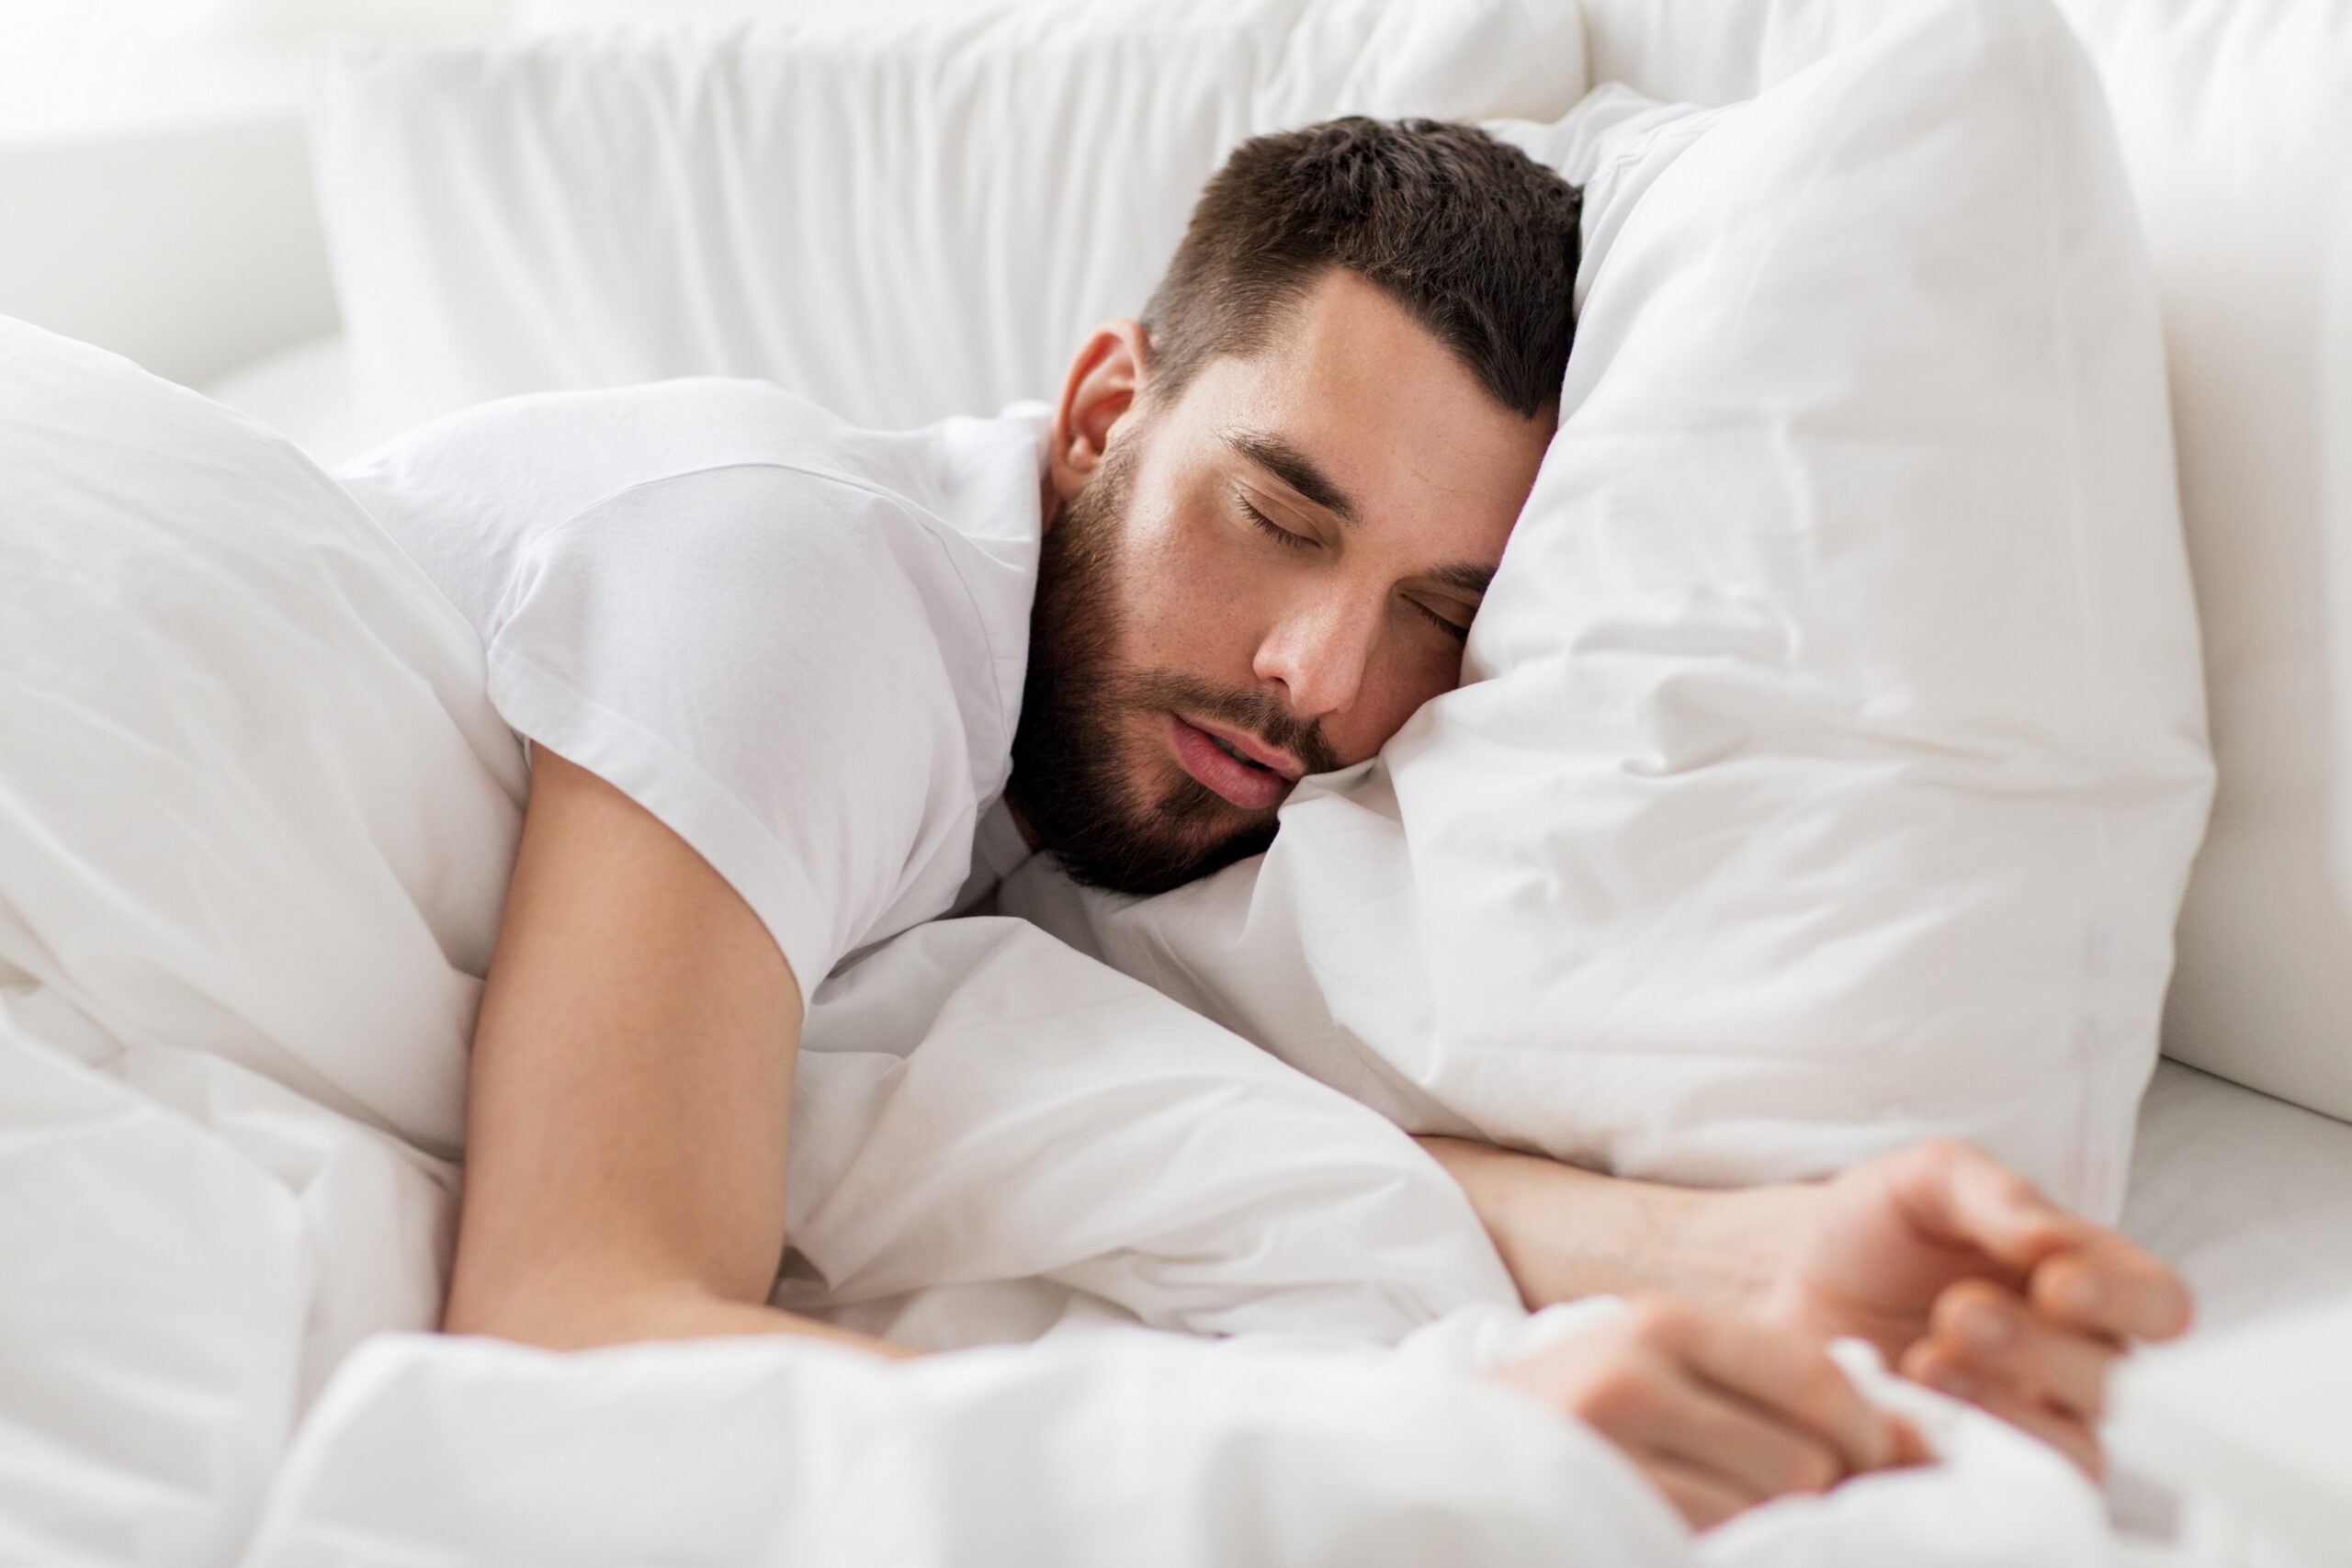 How sleep habits affect memory